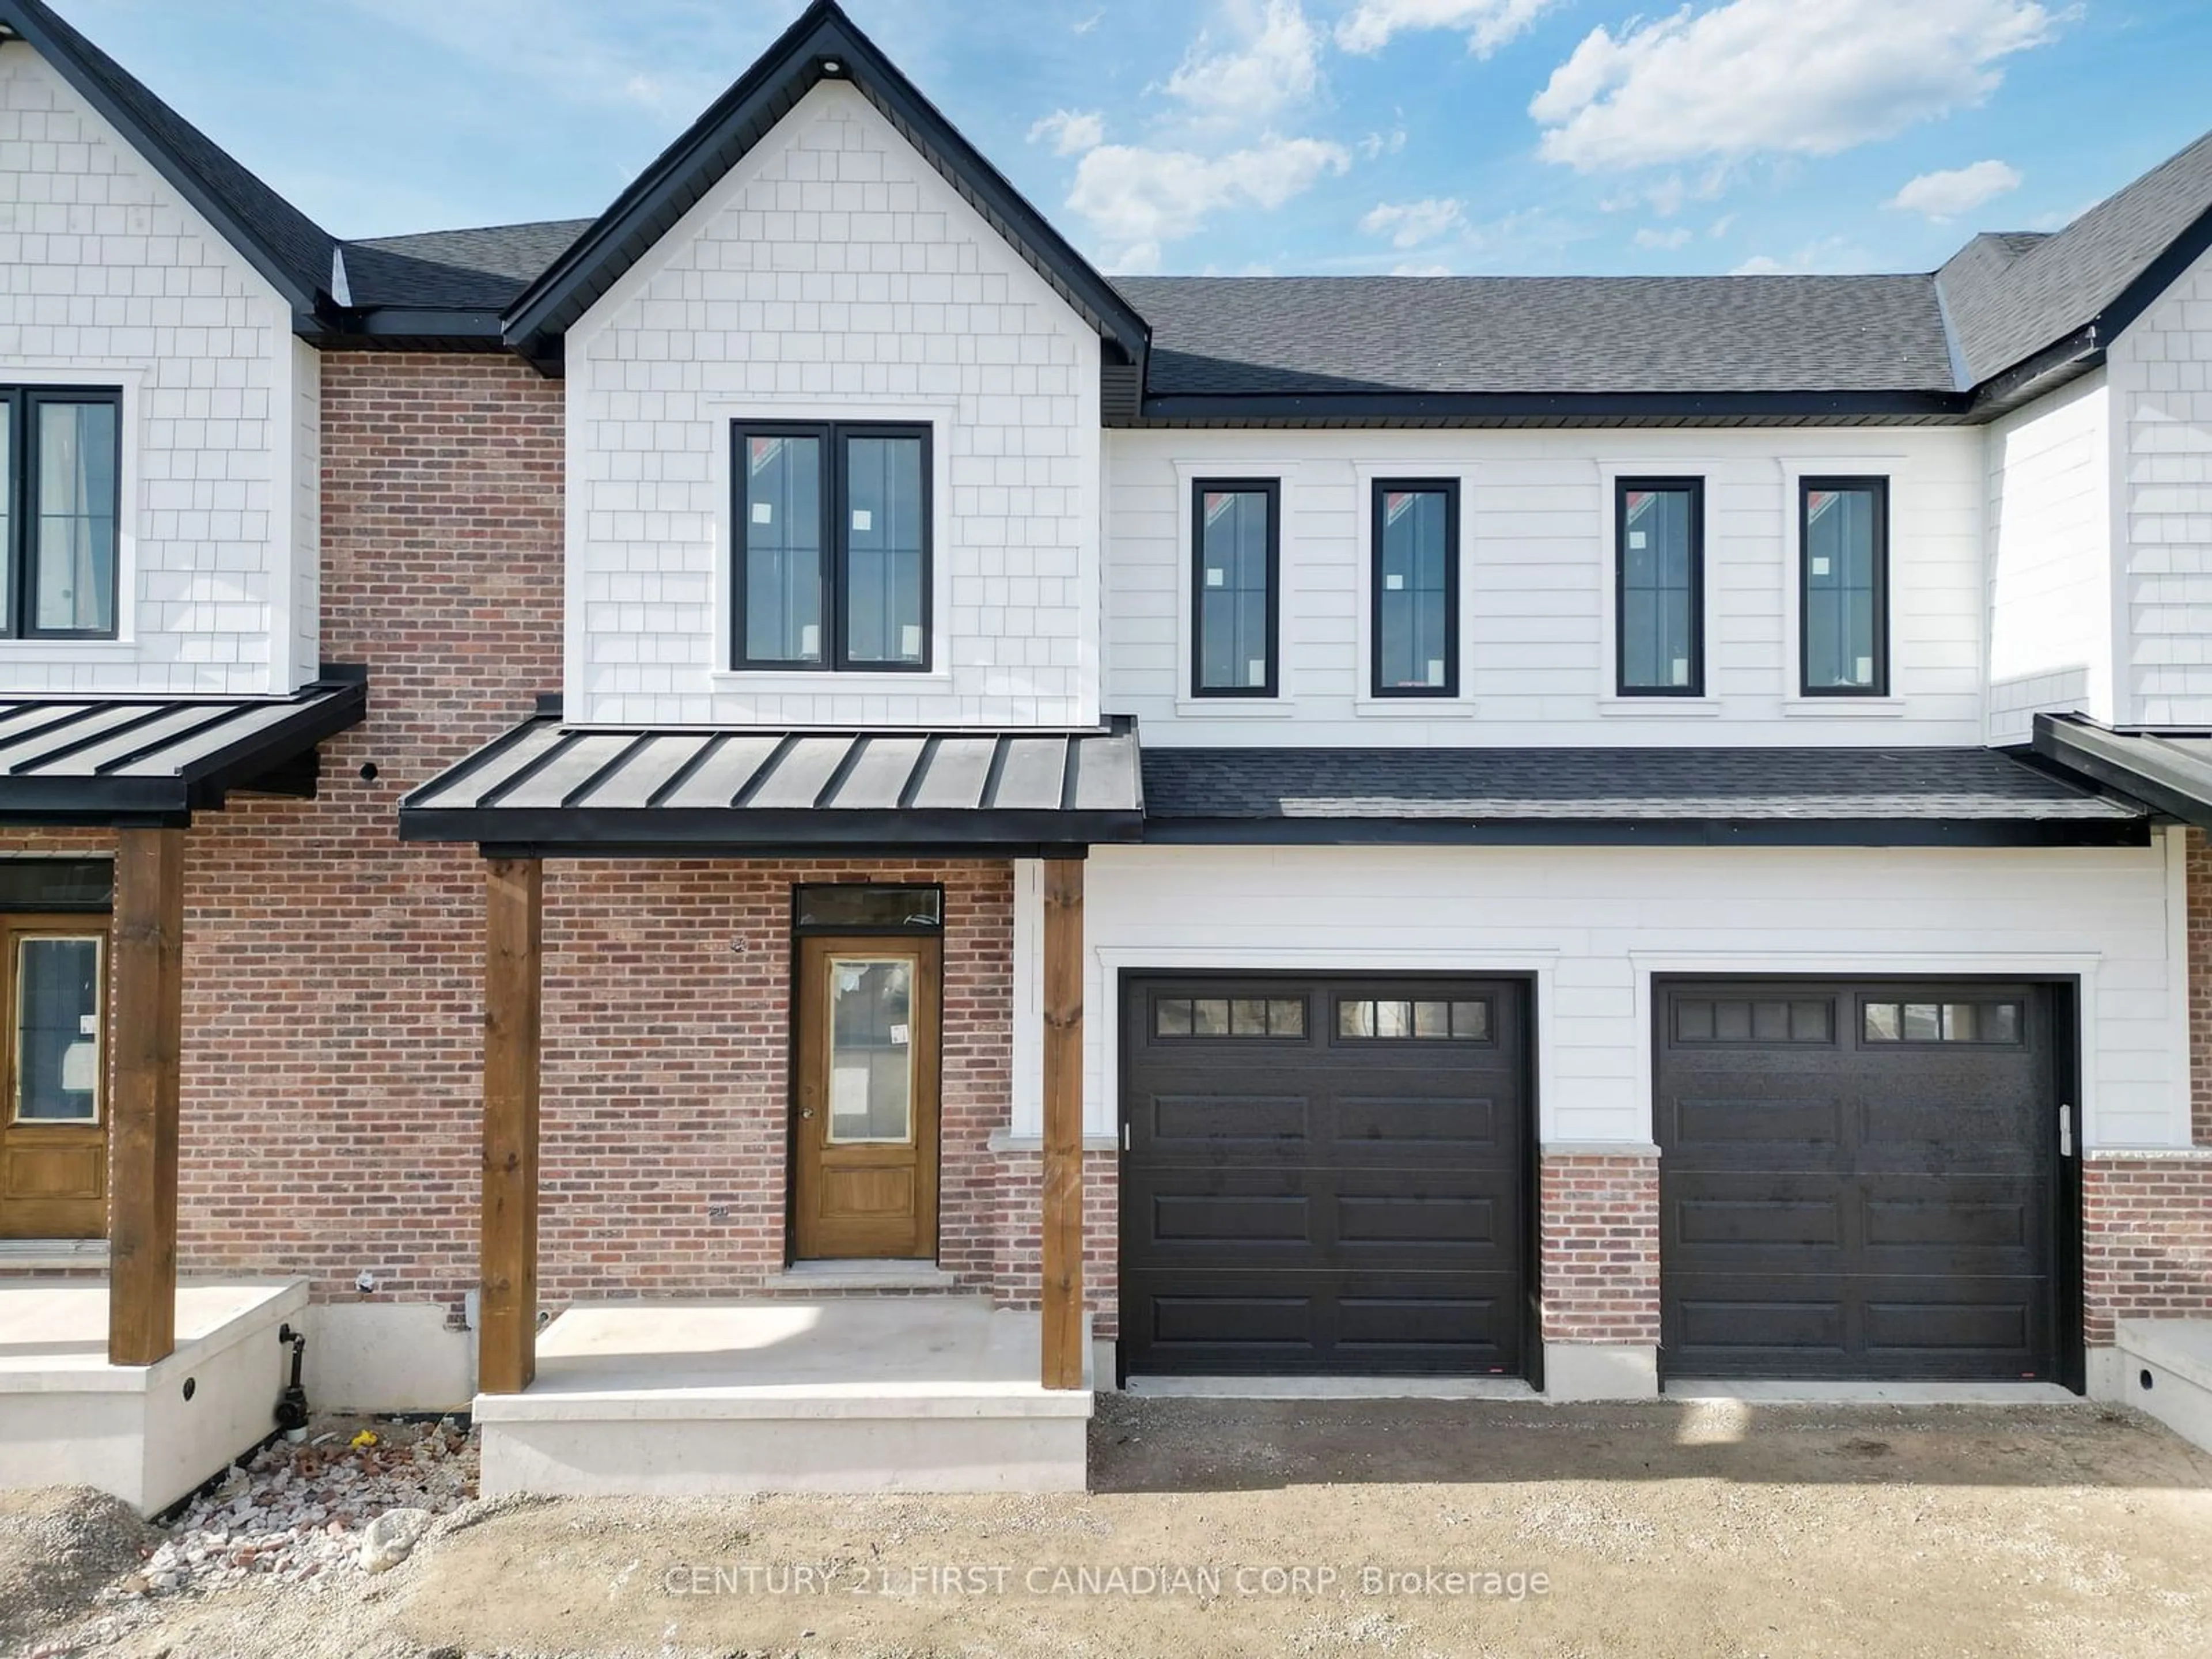 Home with brick exterior material for 147-38 Scotts Dr, Lucan Biddulph Ontario N0M 2J0